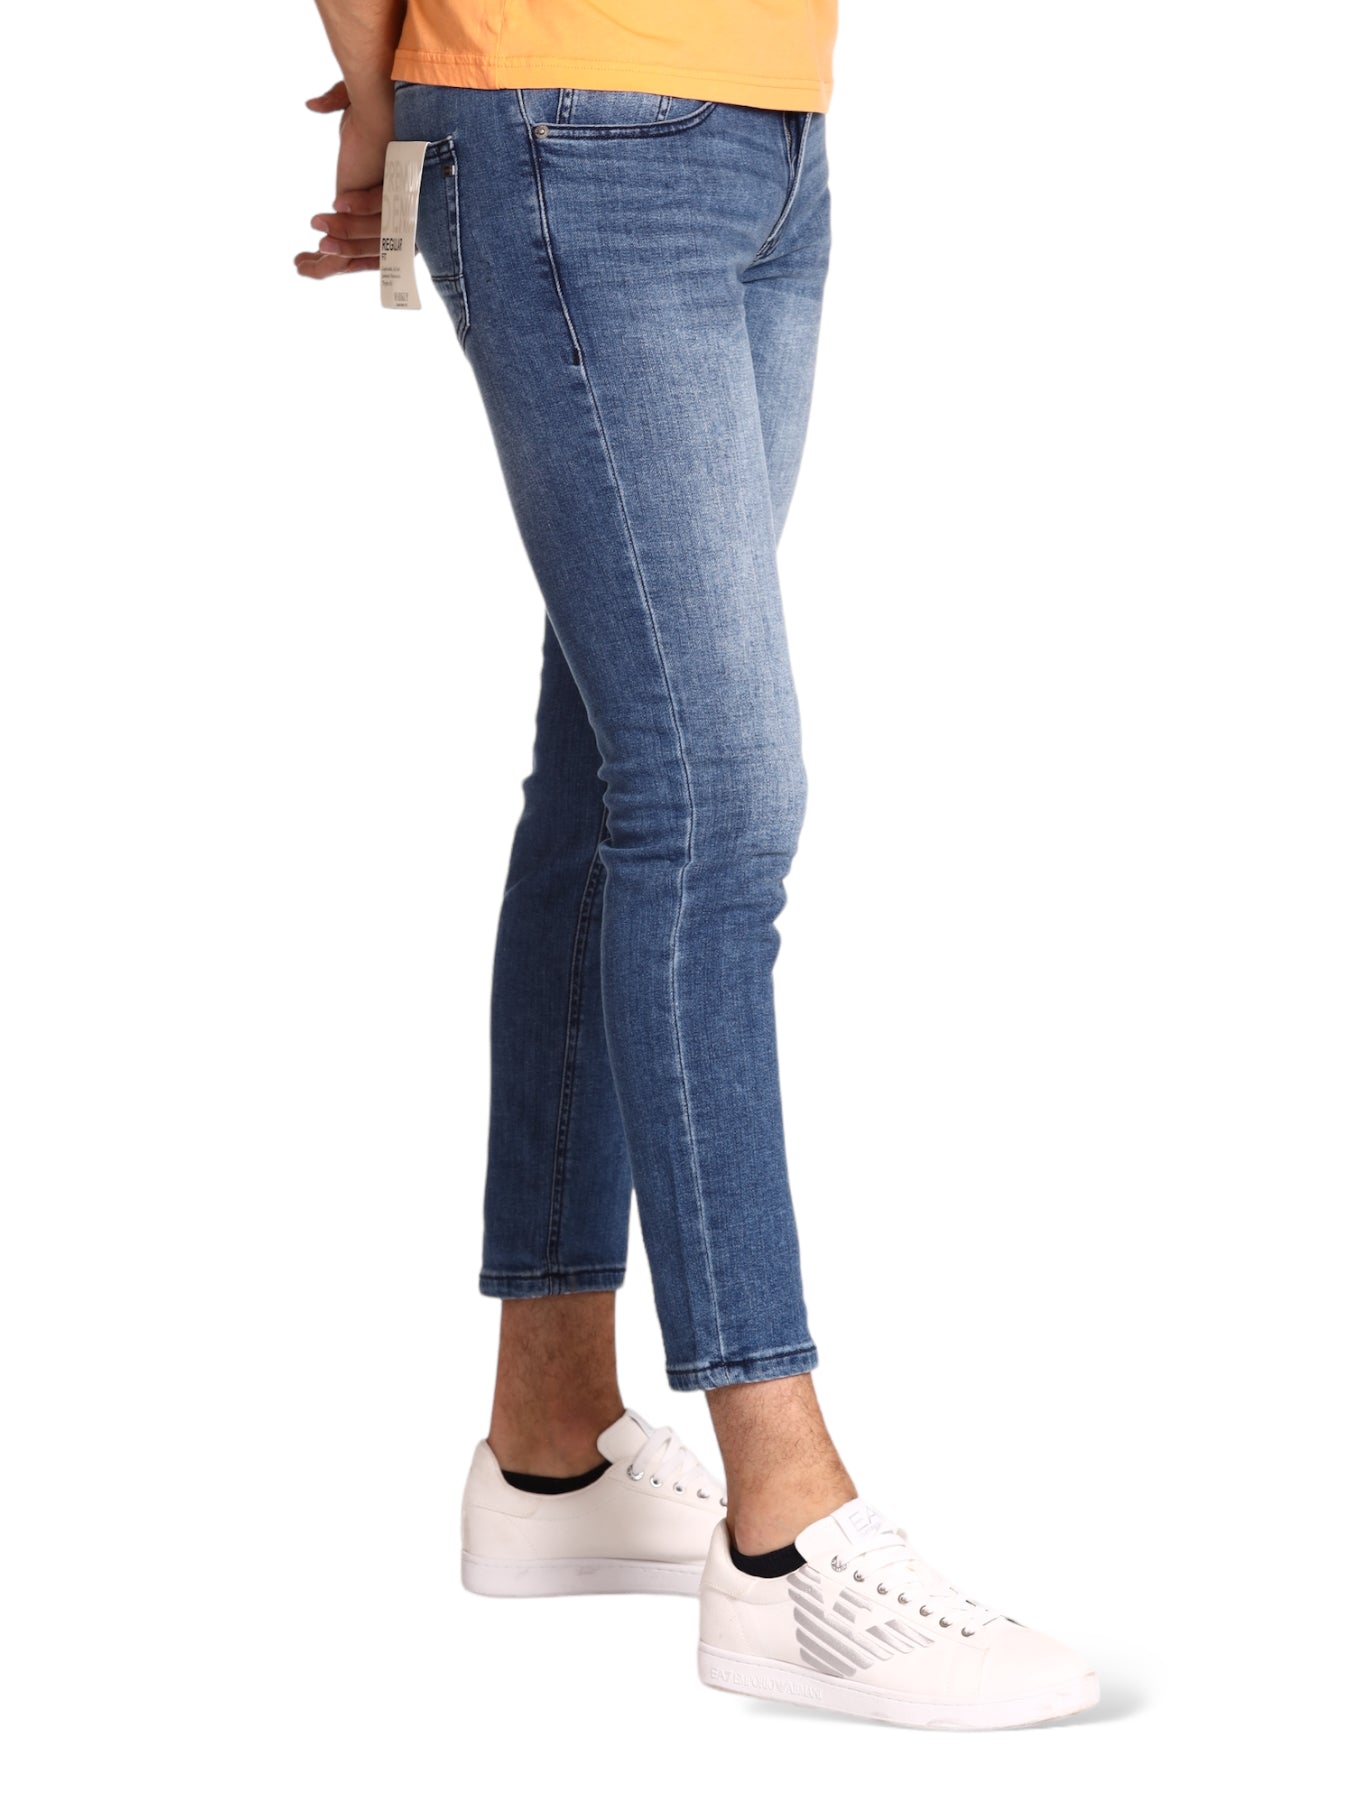 Jeans Mk495002 Denim